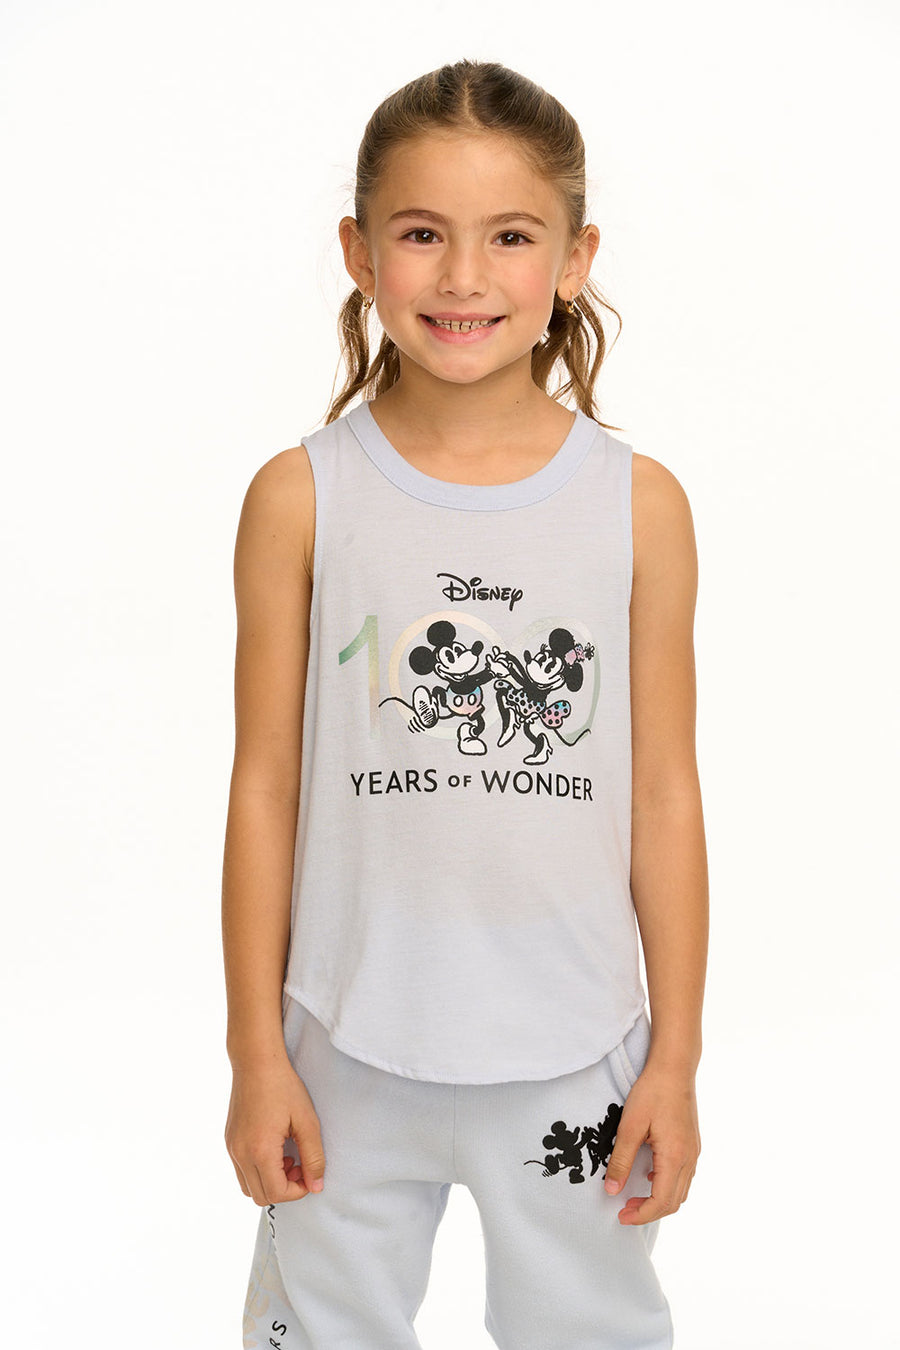 Disney 100 -100 Years of Wonder Tank Top GIRLS chaserbrand